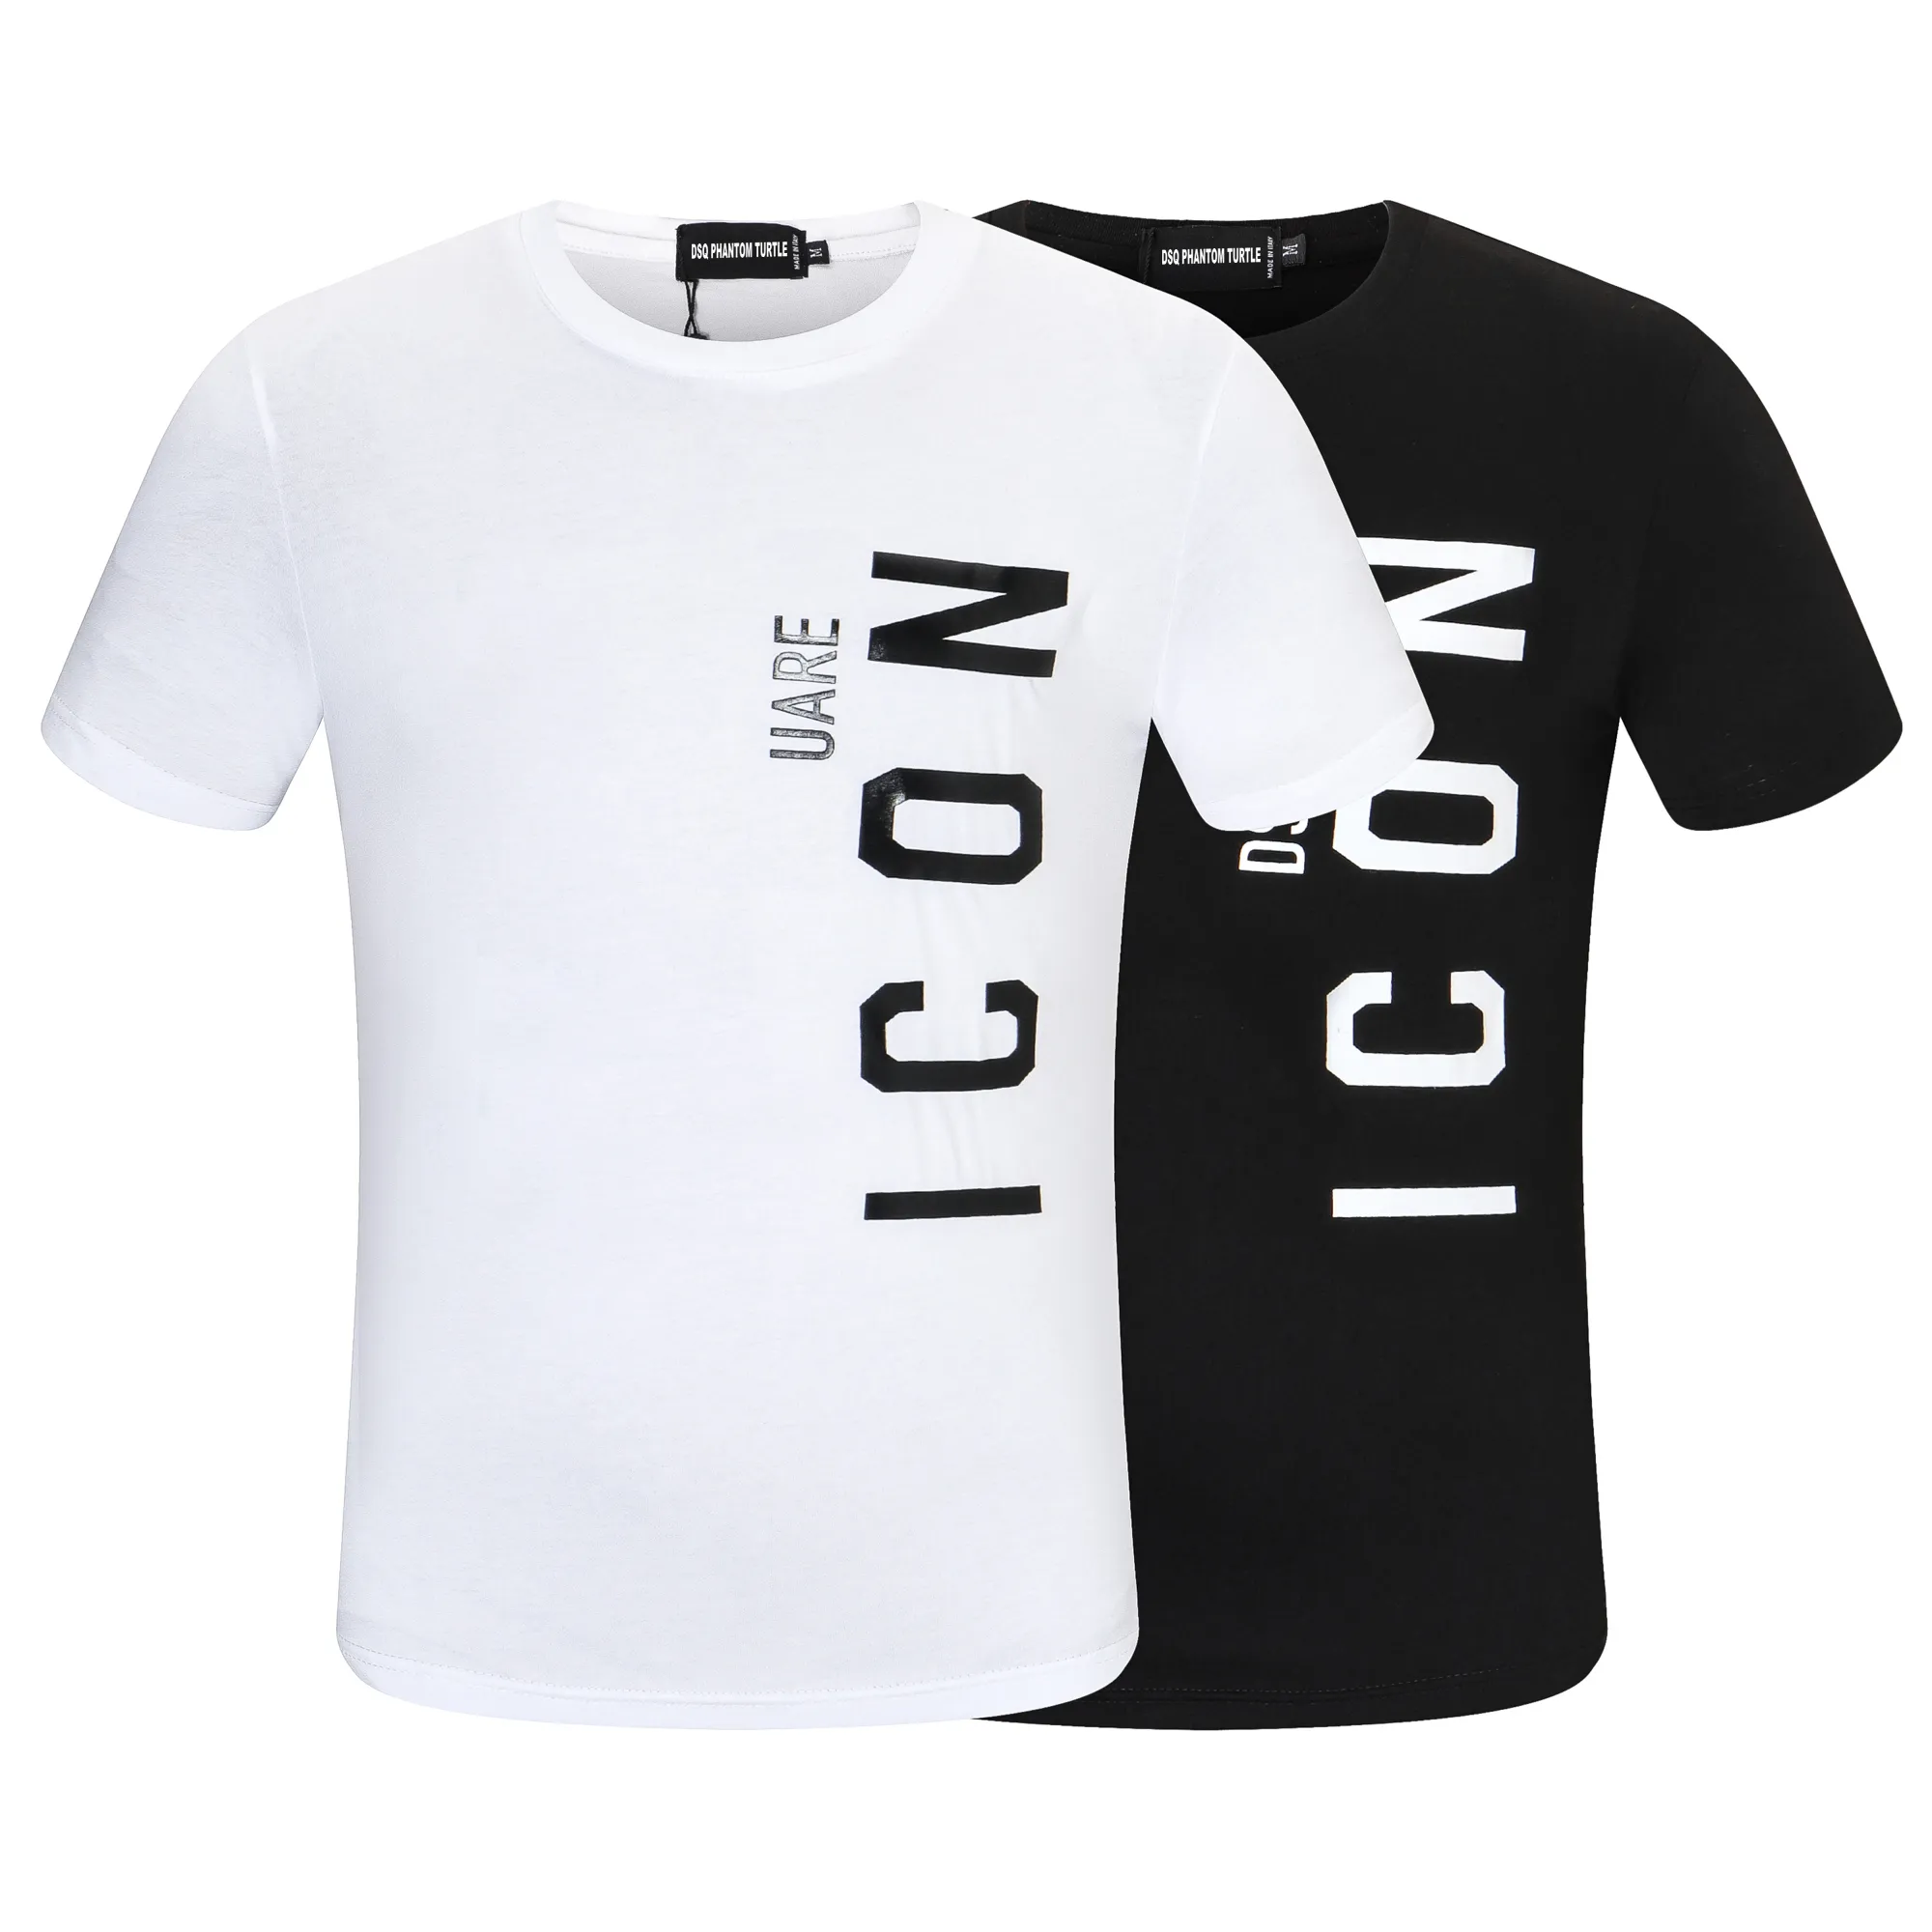 T-shirt maschile DSQ Phantom Turtle T-Shirts T-shirt Skater Black White White Skater Magliette Summer Fashion Casual Street T-shirt Plus M-XXXL 158319